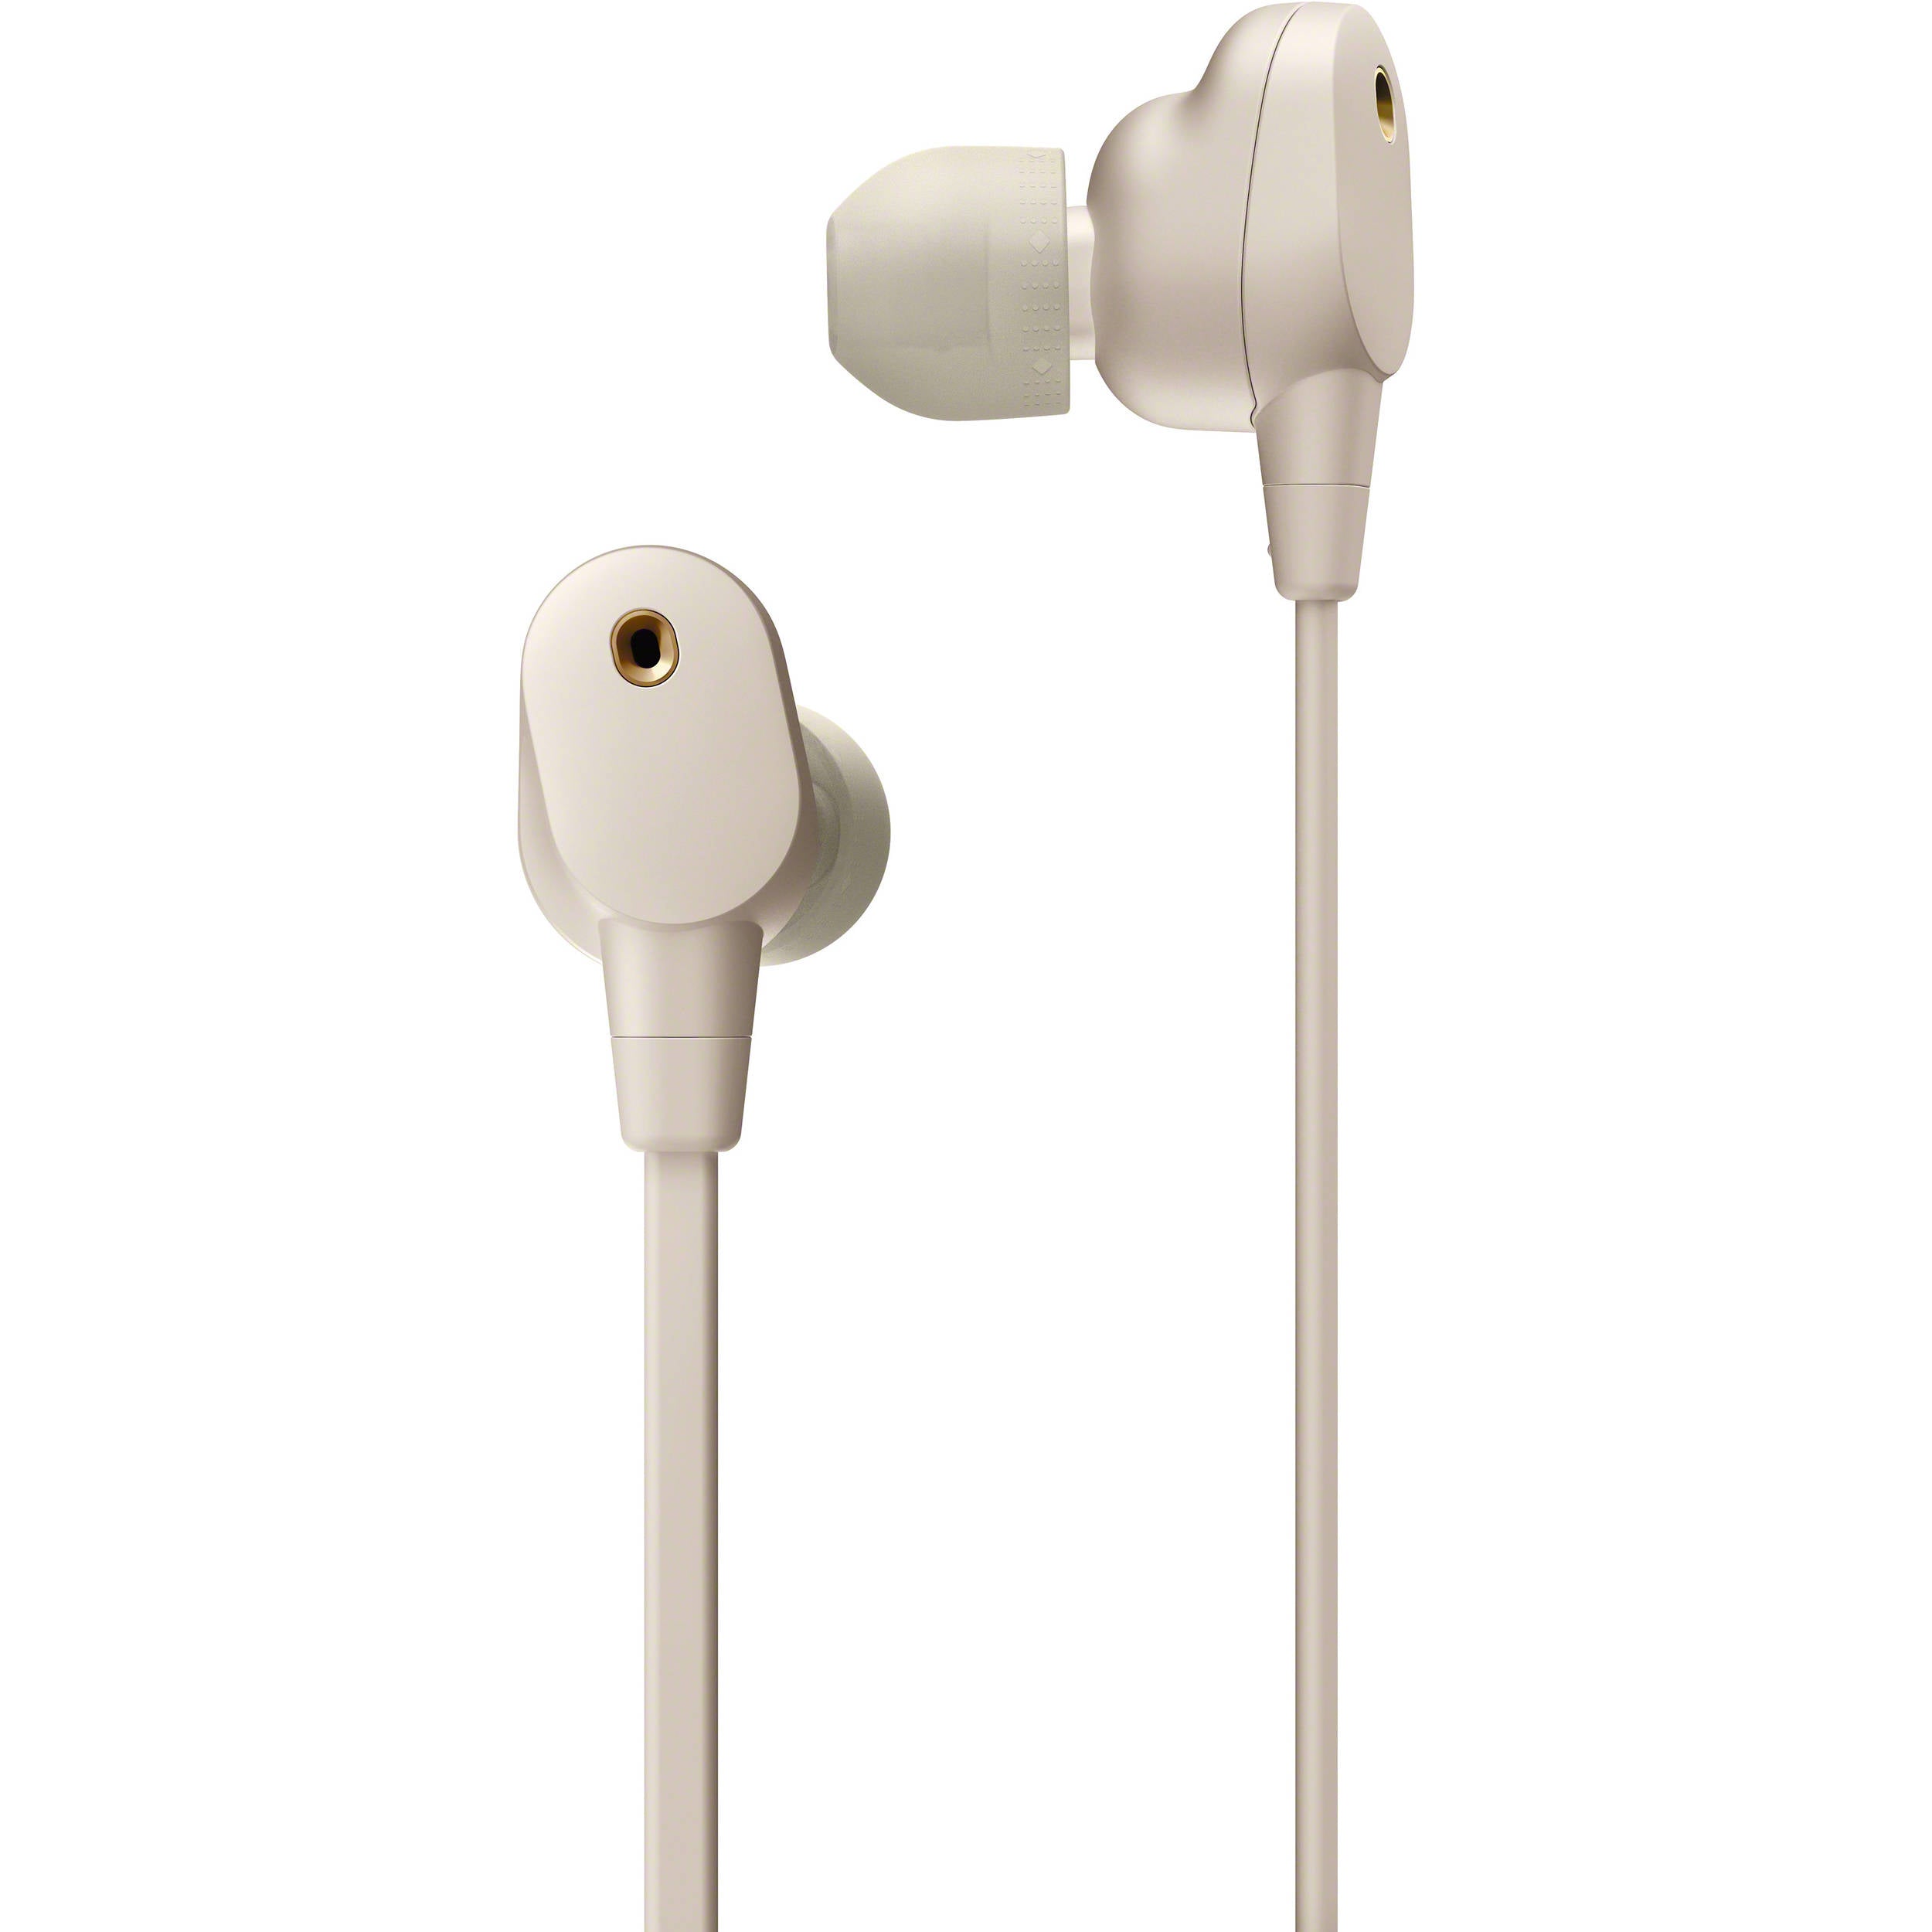 WI-1000XM2 Wireless Noise cancelling In-ear Headphones